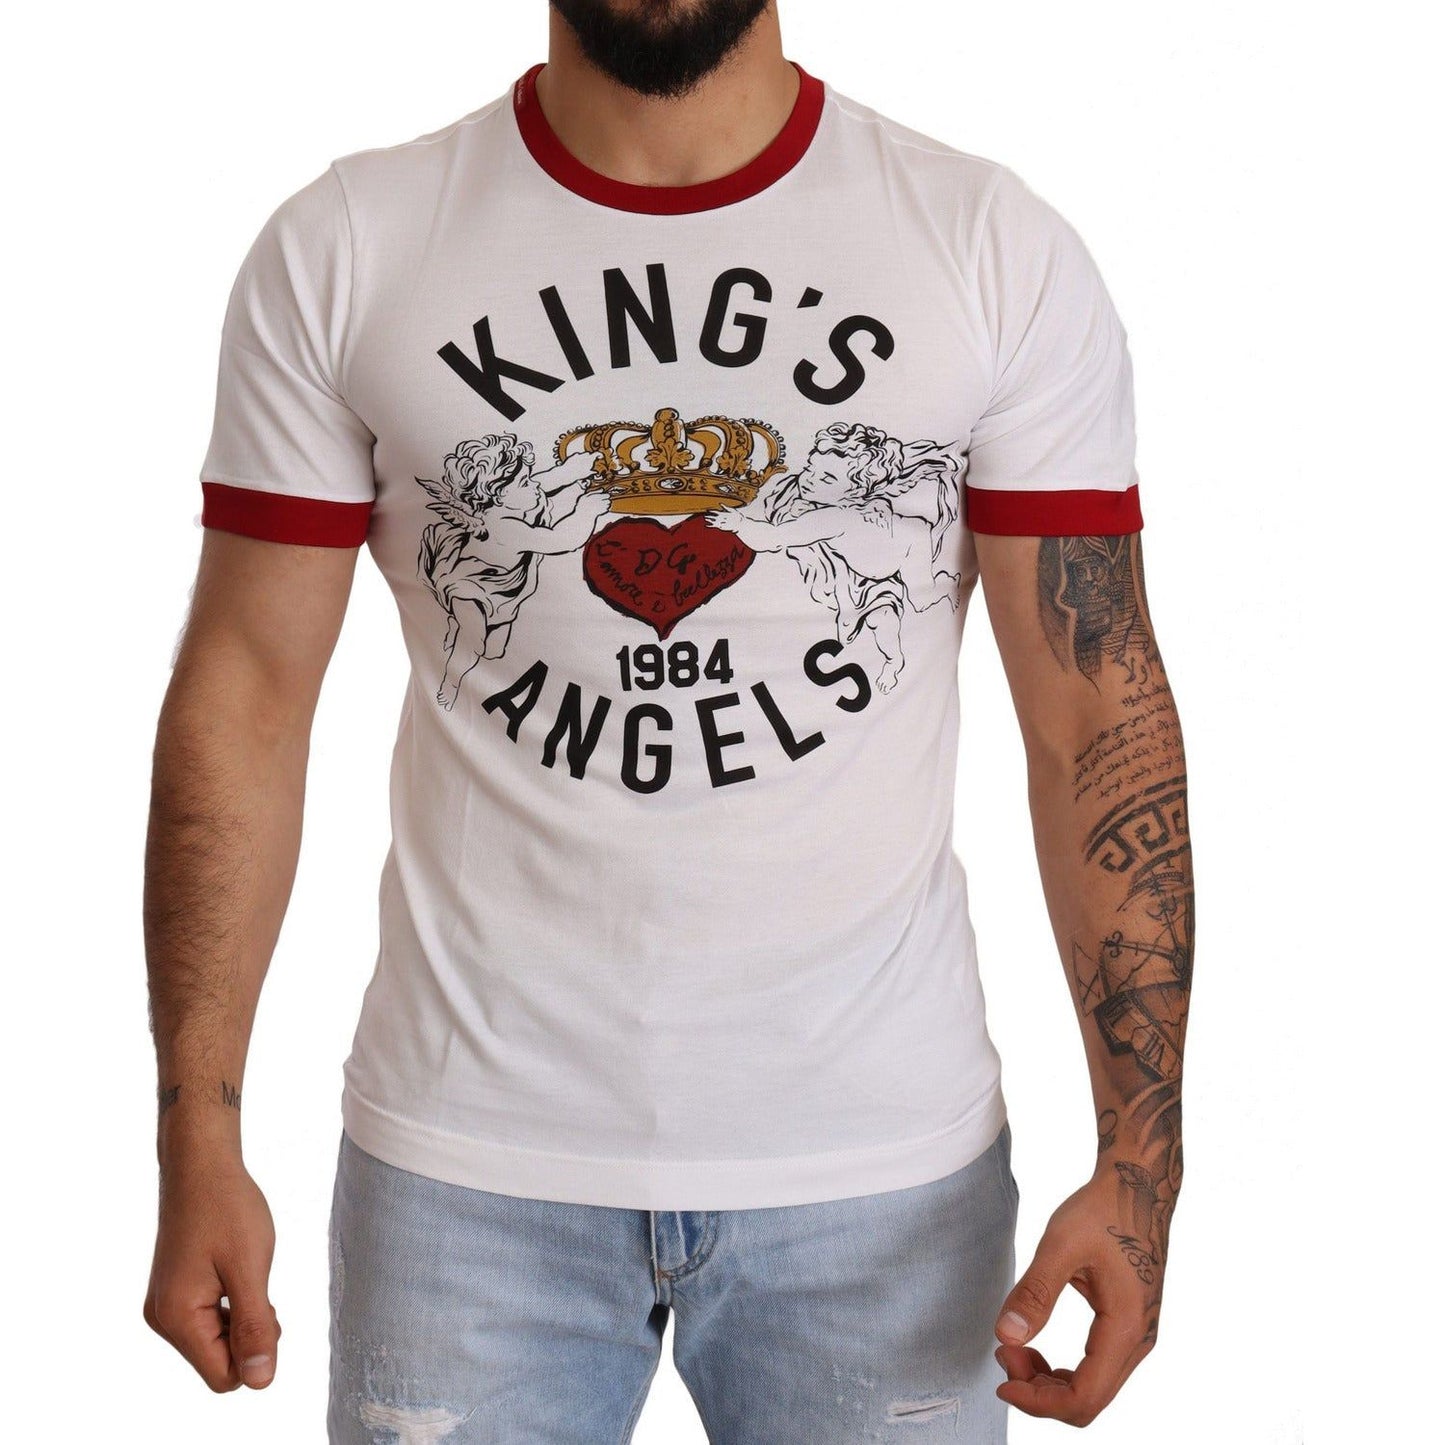 Dolce & Gabbana Exquisite Angelic Motif Cotton T-Shirt MAN T-SHIRTS white-kings-angels-print-cotton-t-shirt